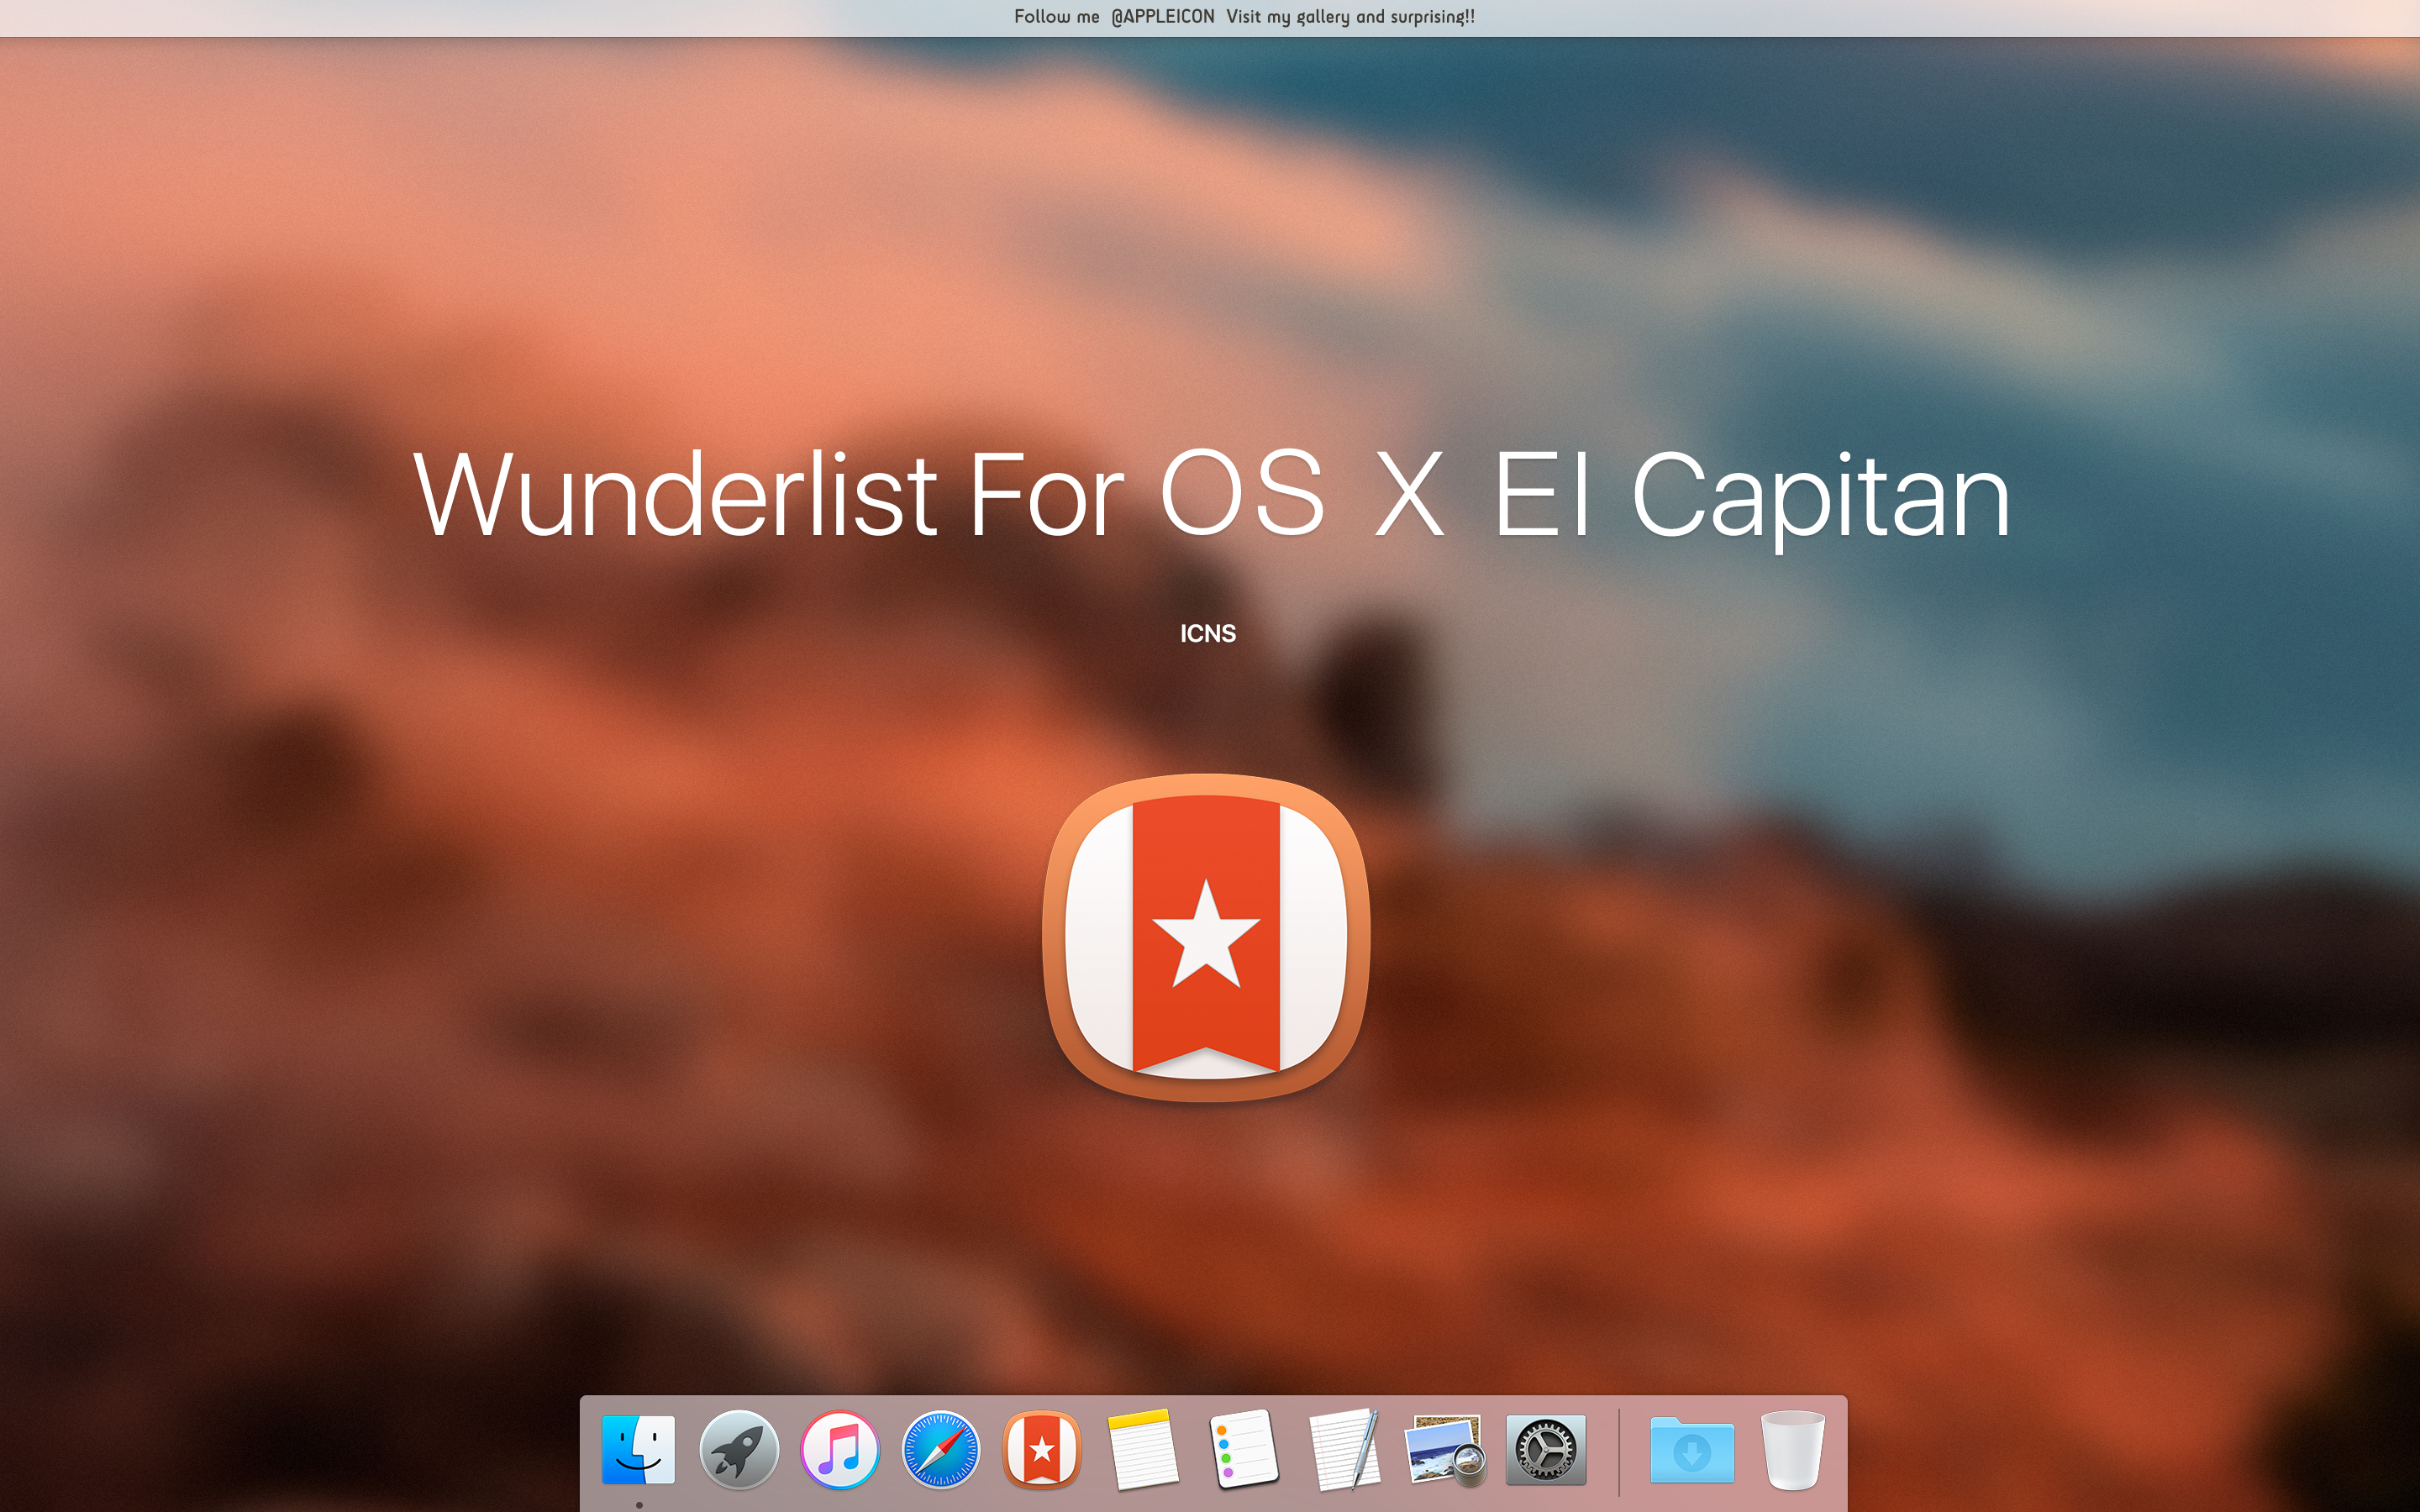 Wunderlist For OS X El Capitan